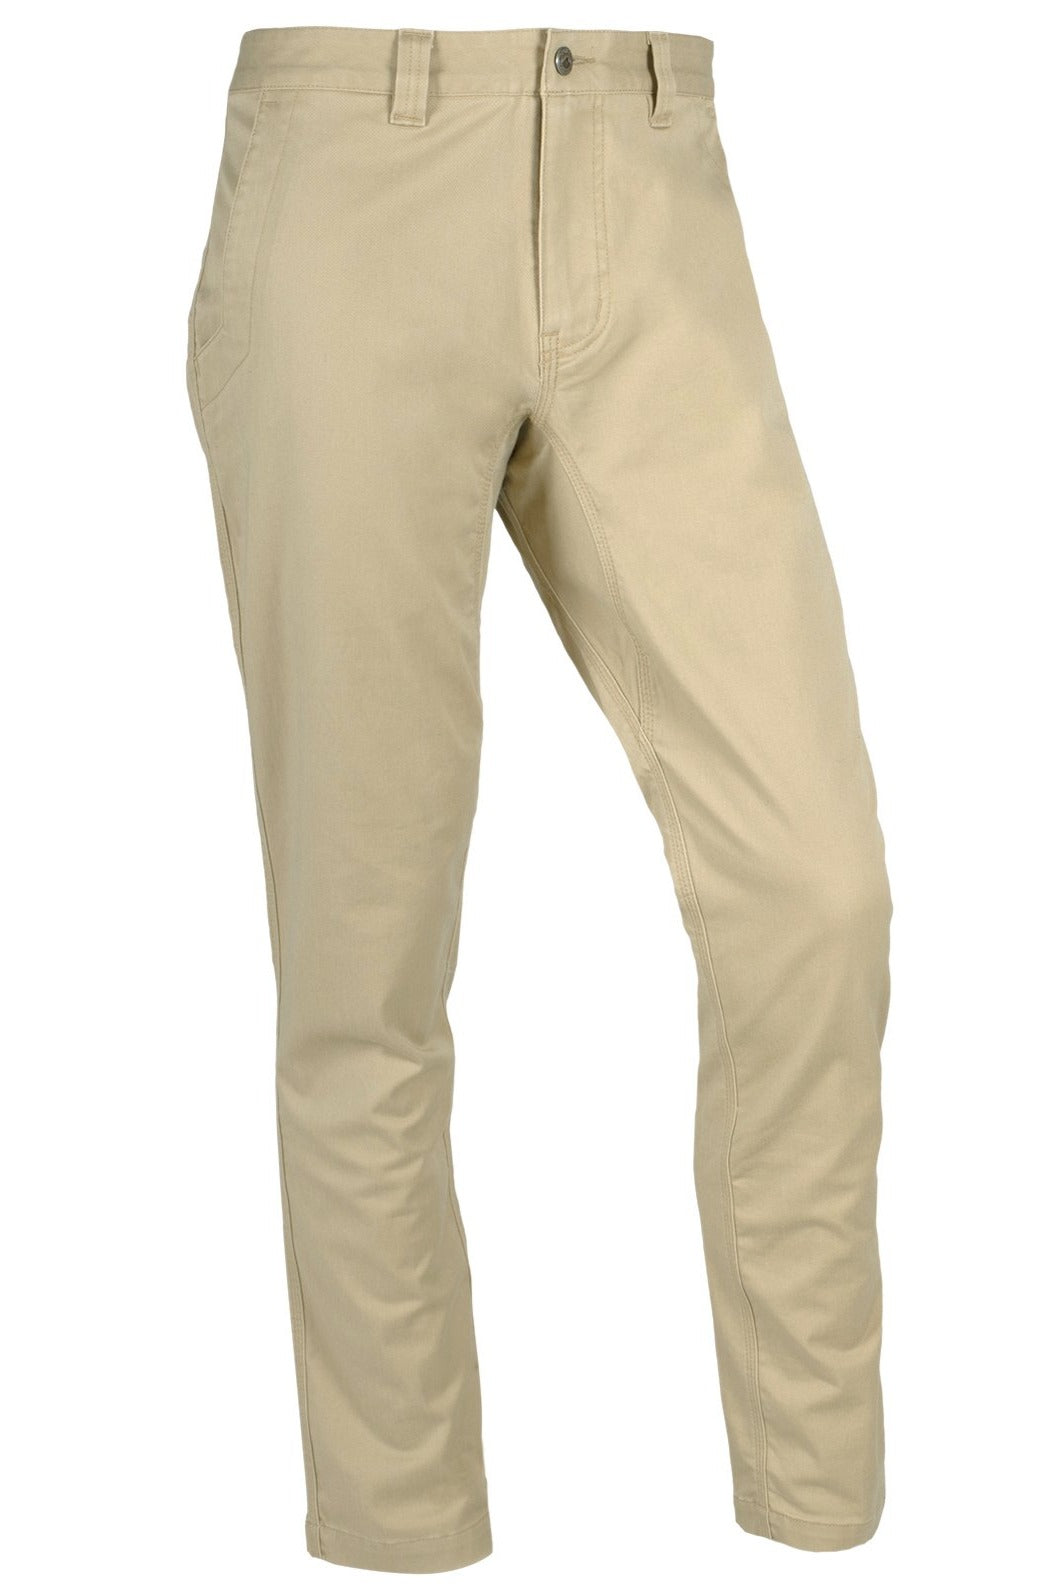 Mountain Khakis Teton Pant Modern Fit- Sand